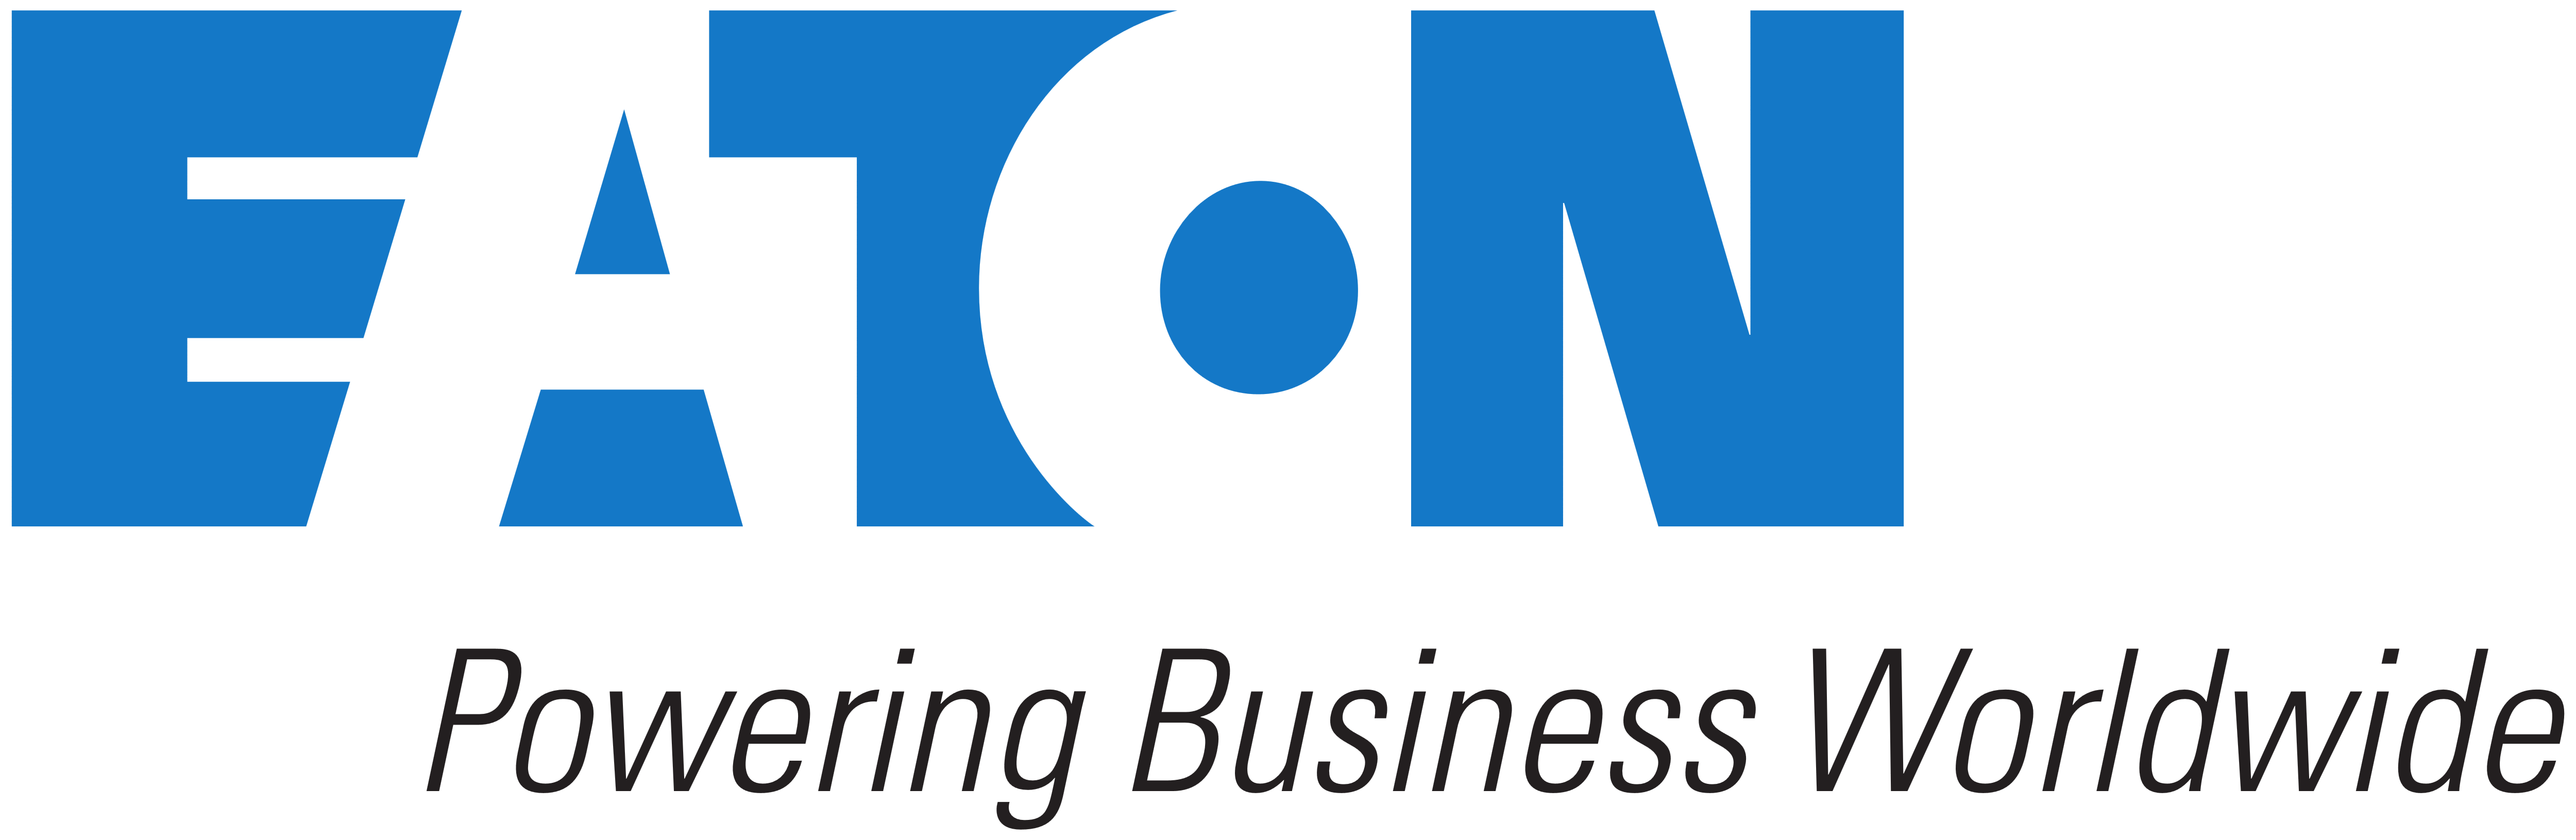 Eaton_Corporation_logo